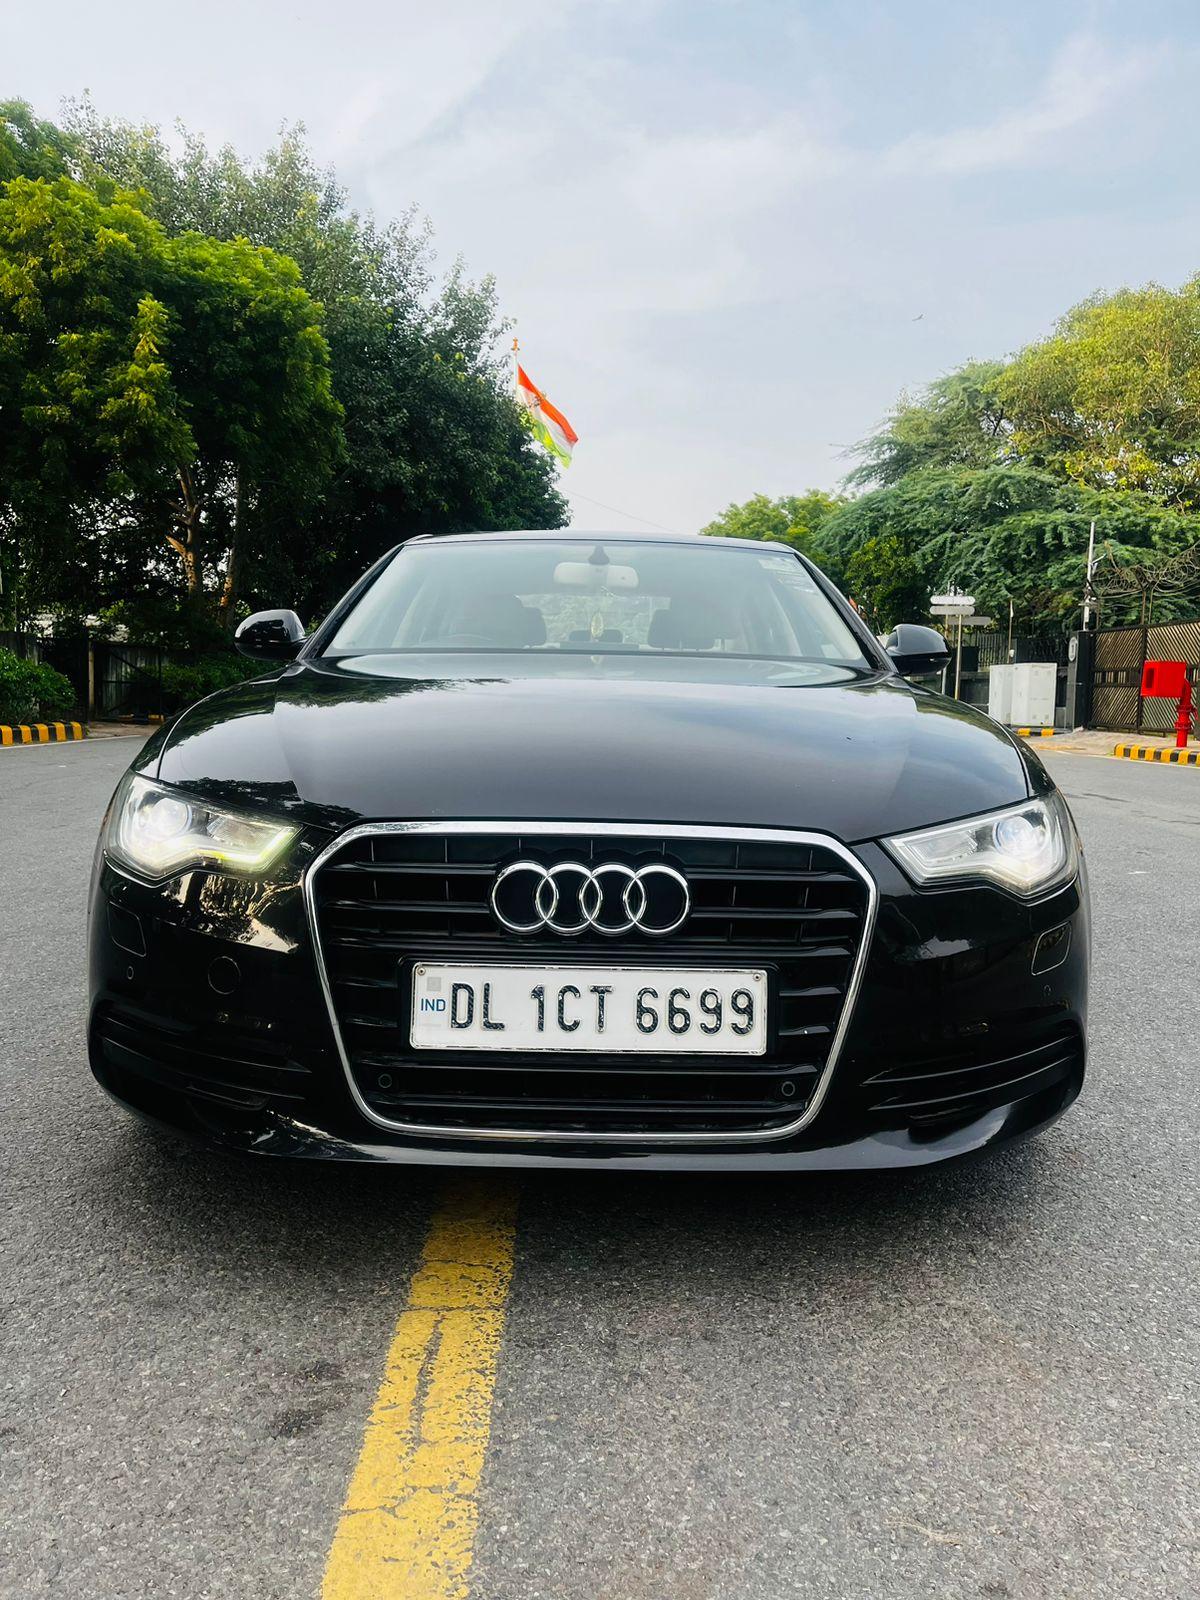 Used 2015 Audi A6, Bank Street, New Delhi